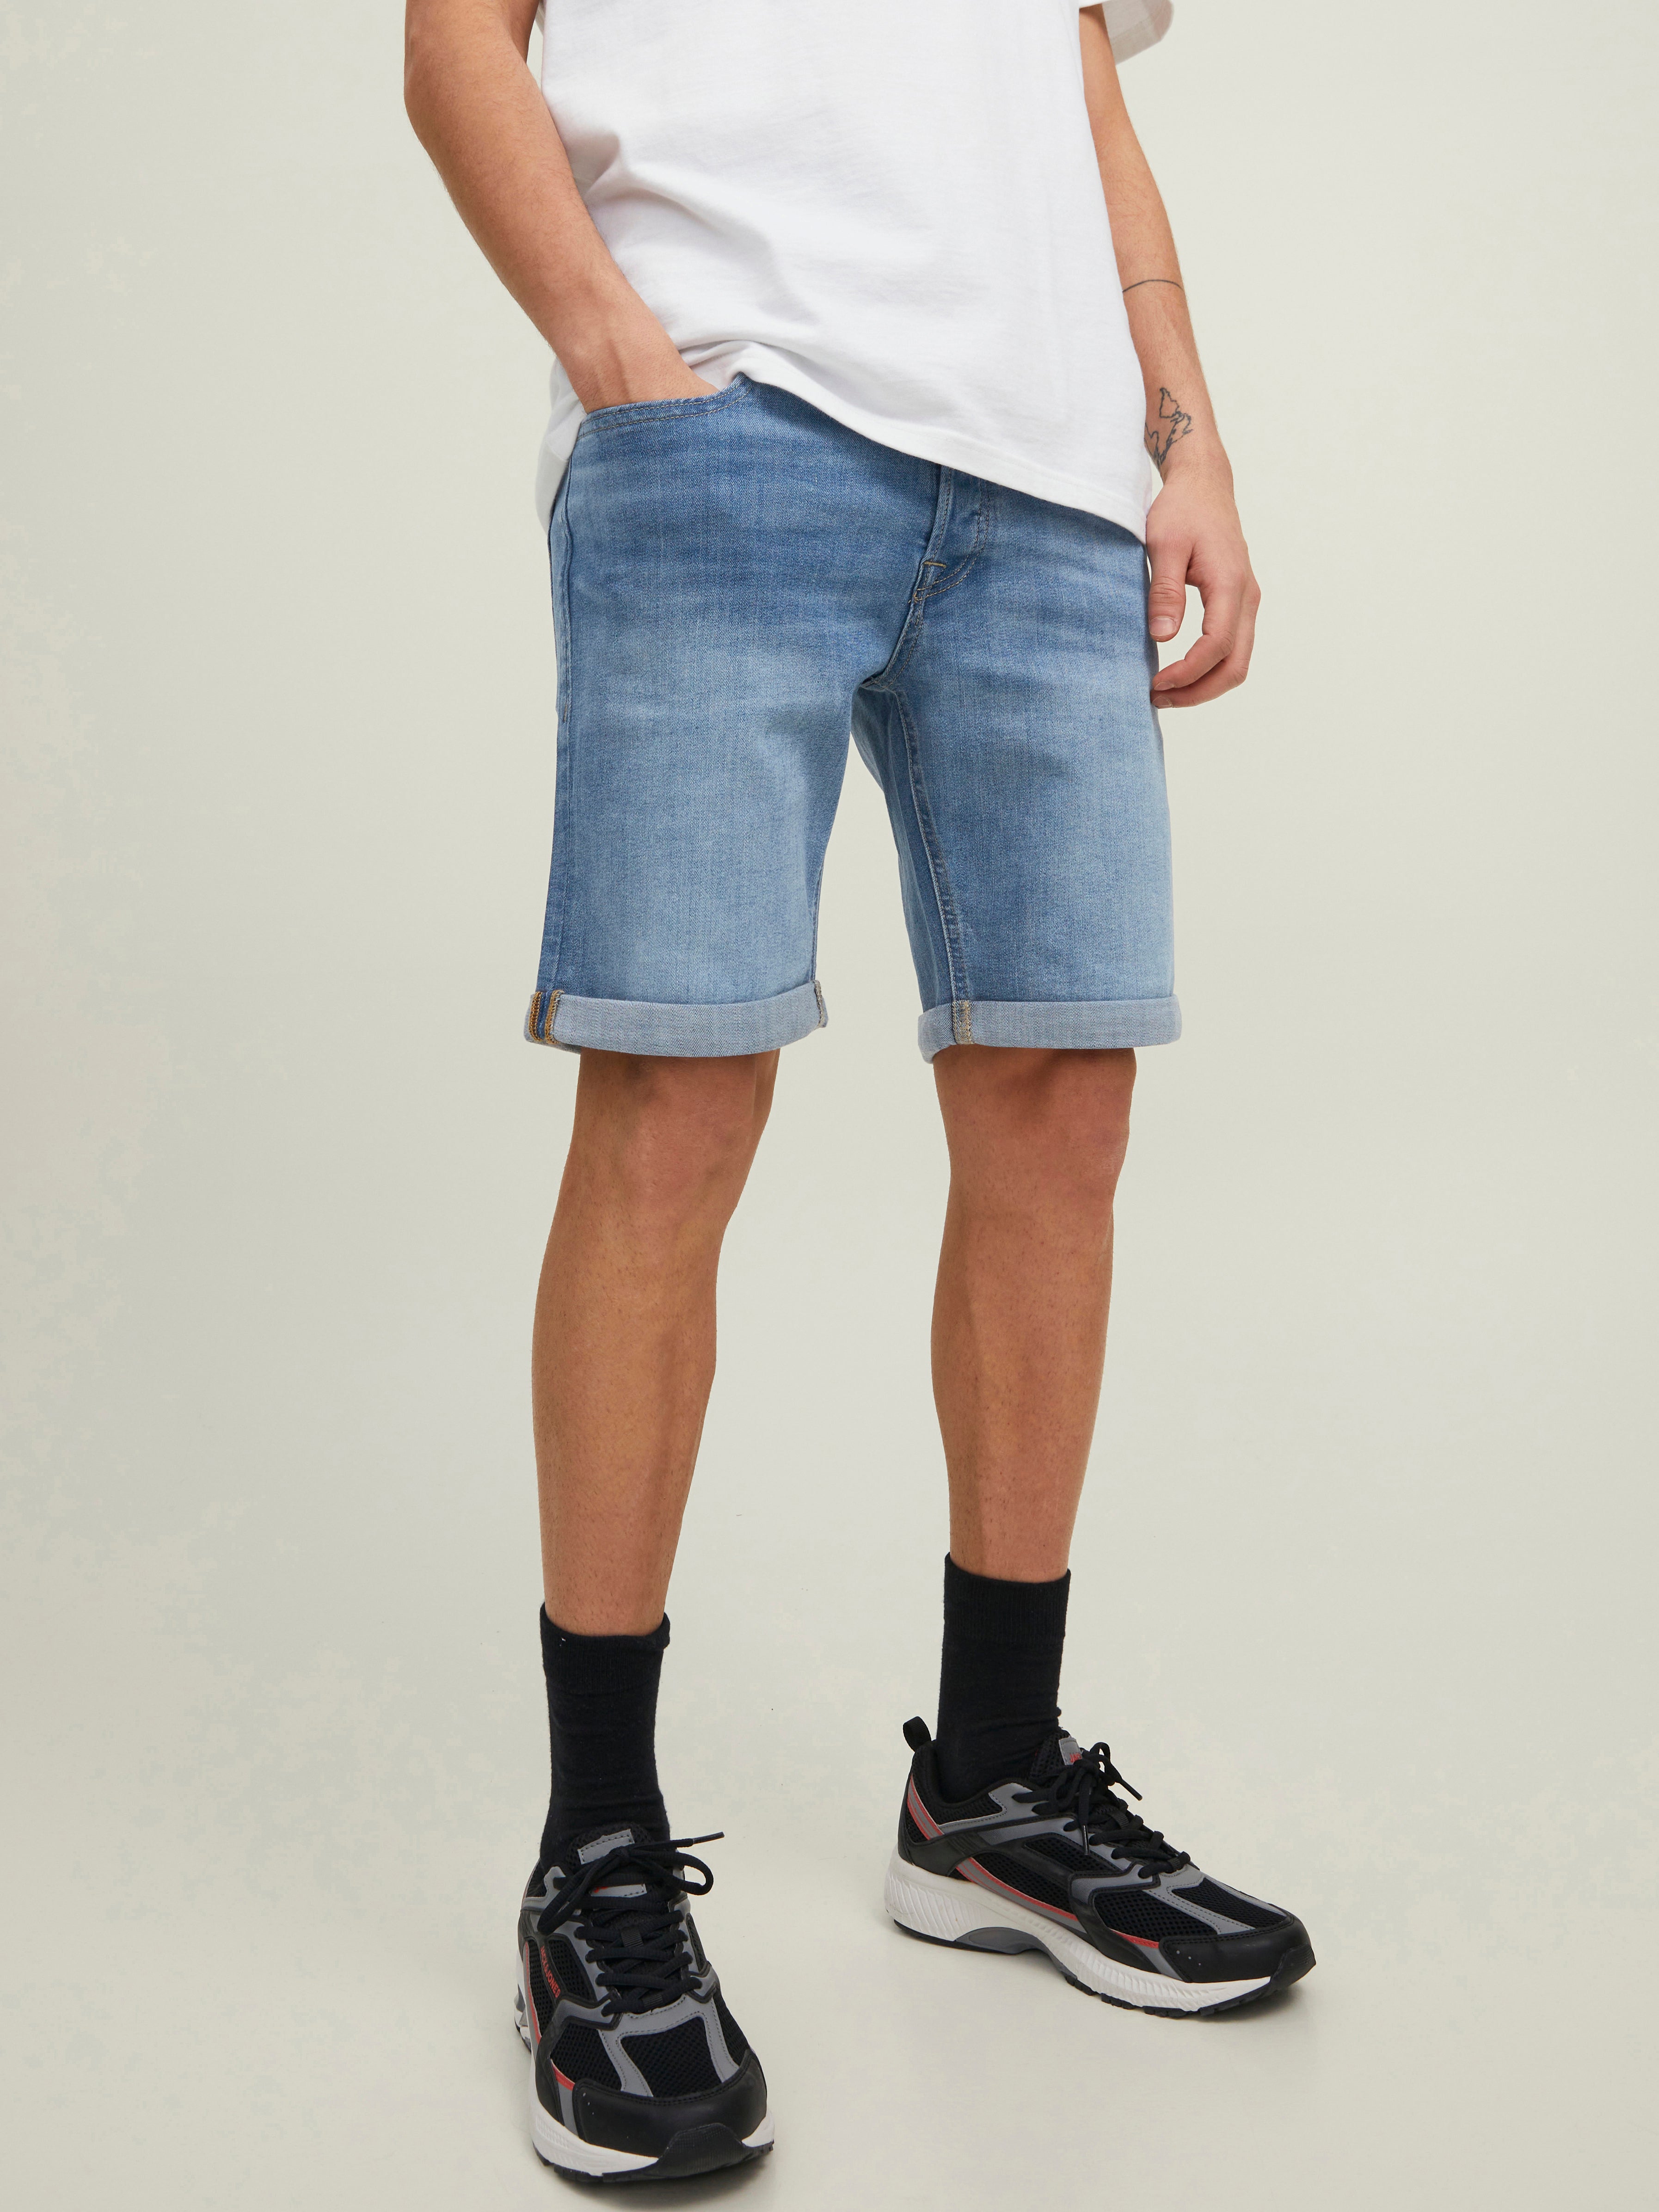 Jack & Jones Shorts jeans Rabatt 62 % HERREN Jeans NO STYLE Grau M 